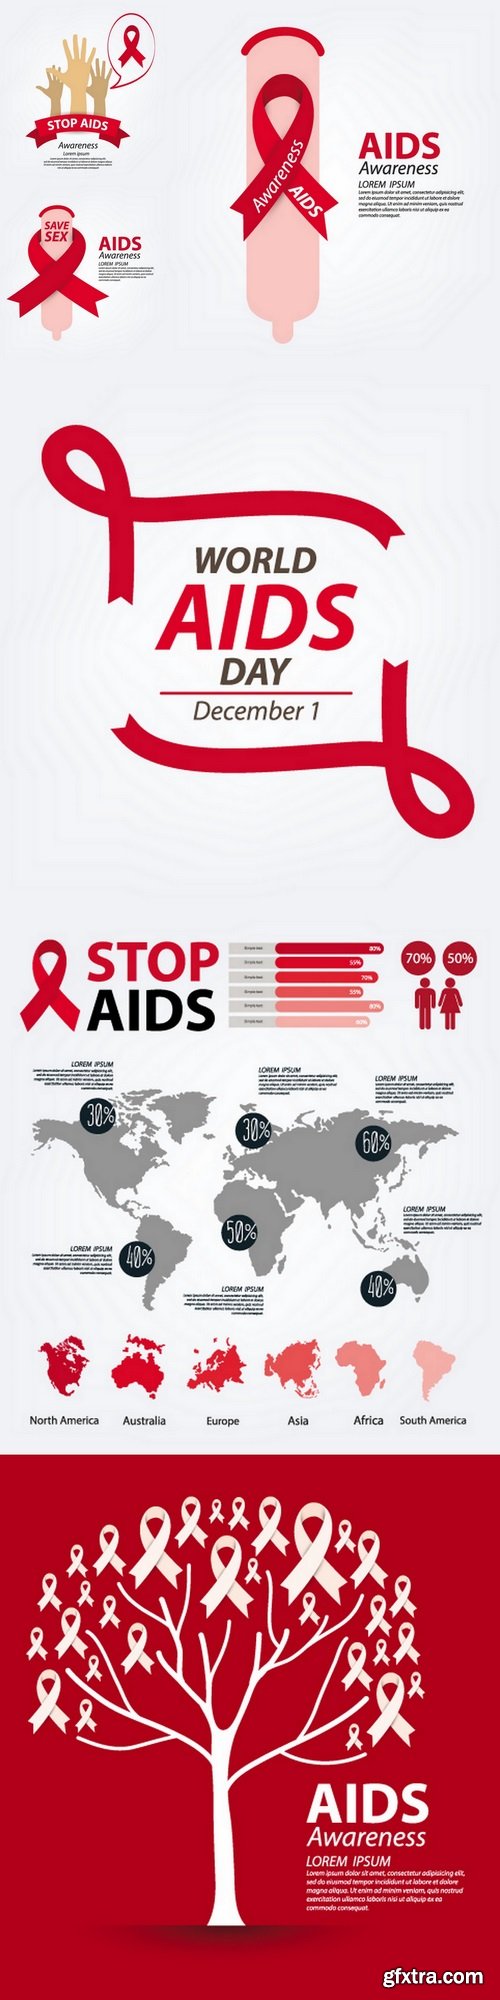 Aids awareness concept vector